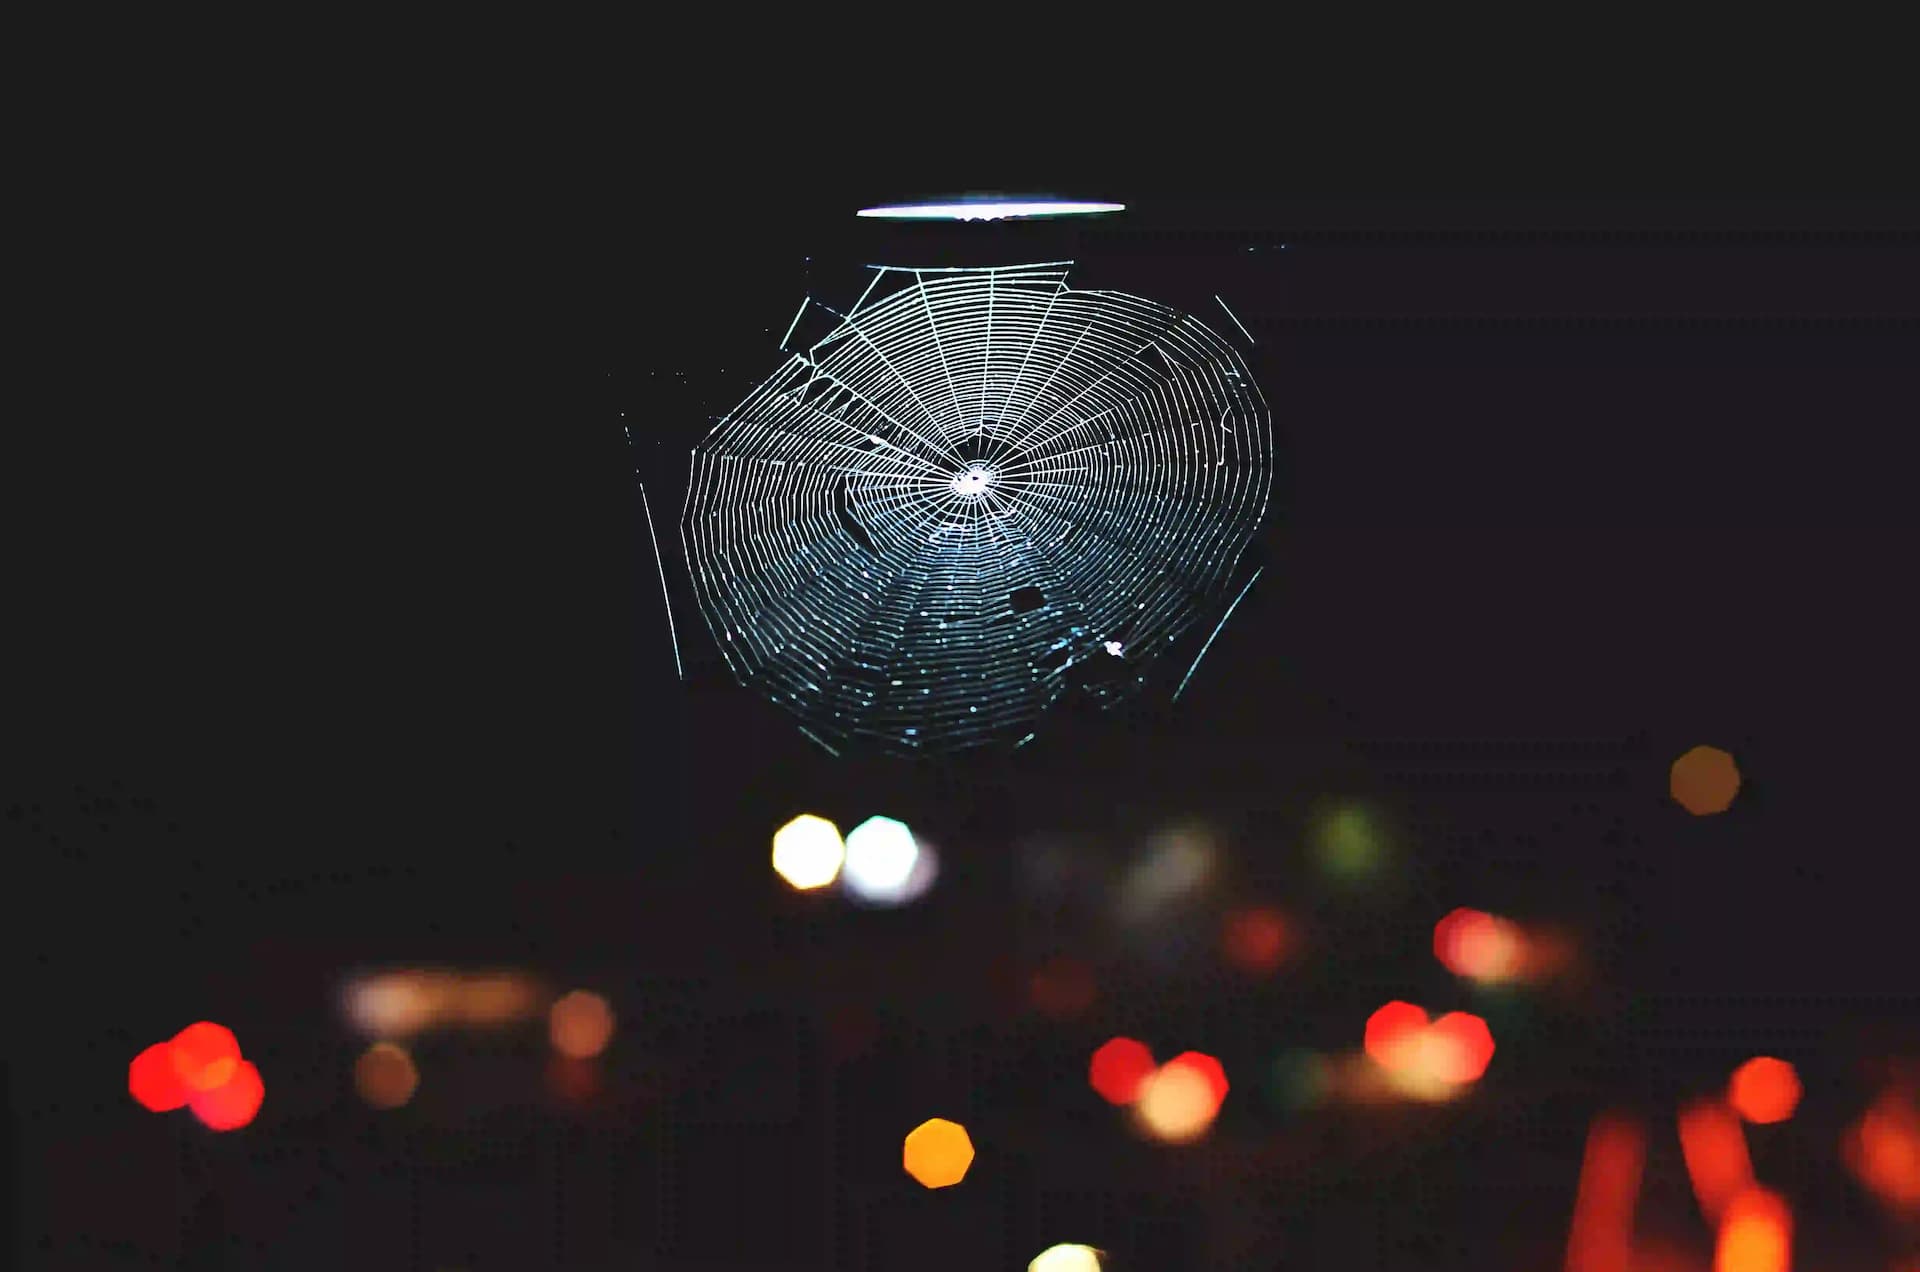 Spider net with black background